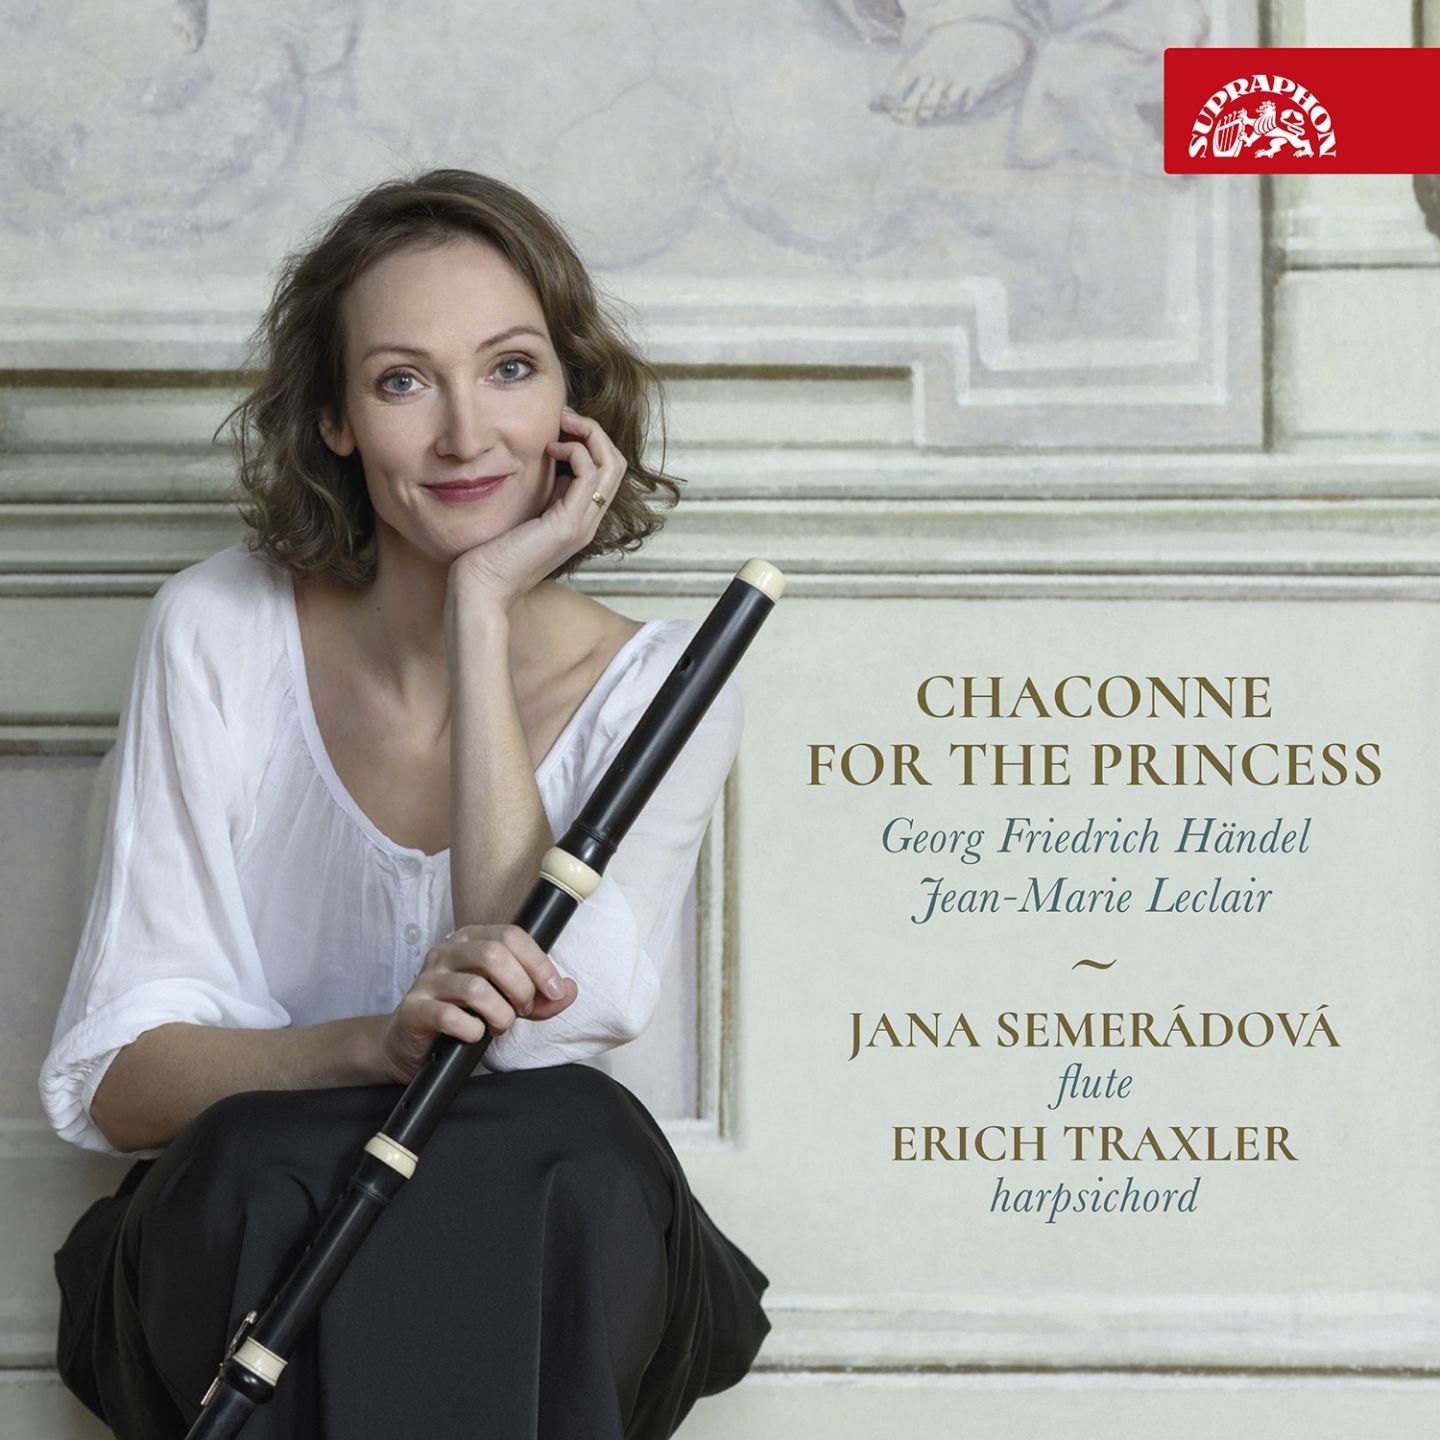 Jana Semeradova, Erich Traxler - Handel, Leclair - Chaconne for the Princess (2020) [FLAC 24bit/96kHz]